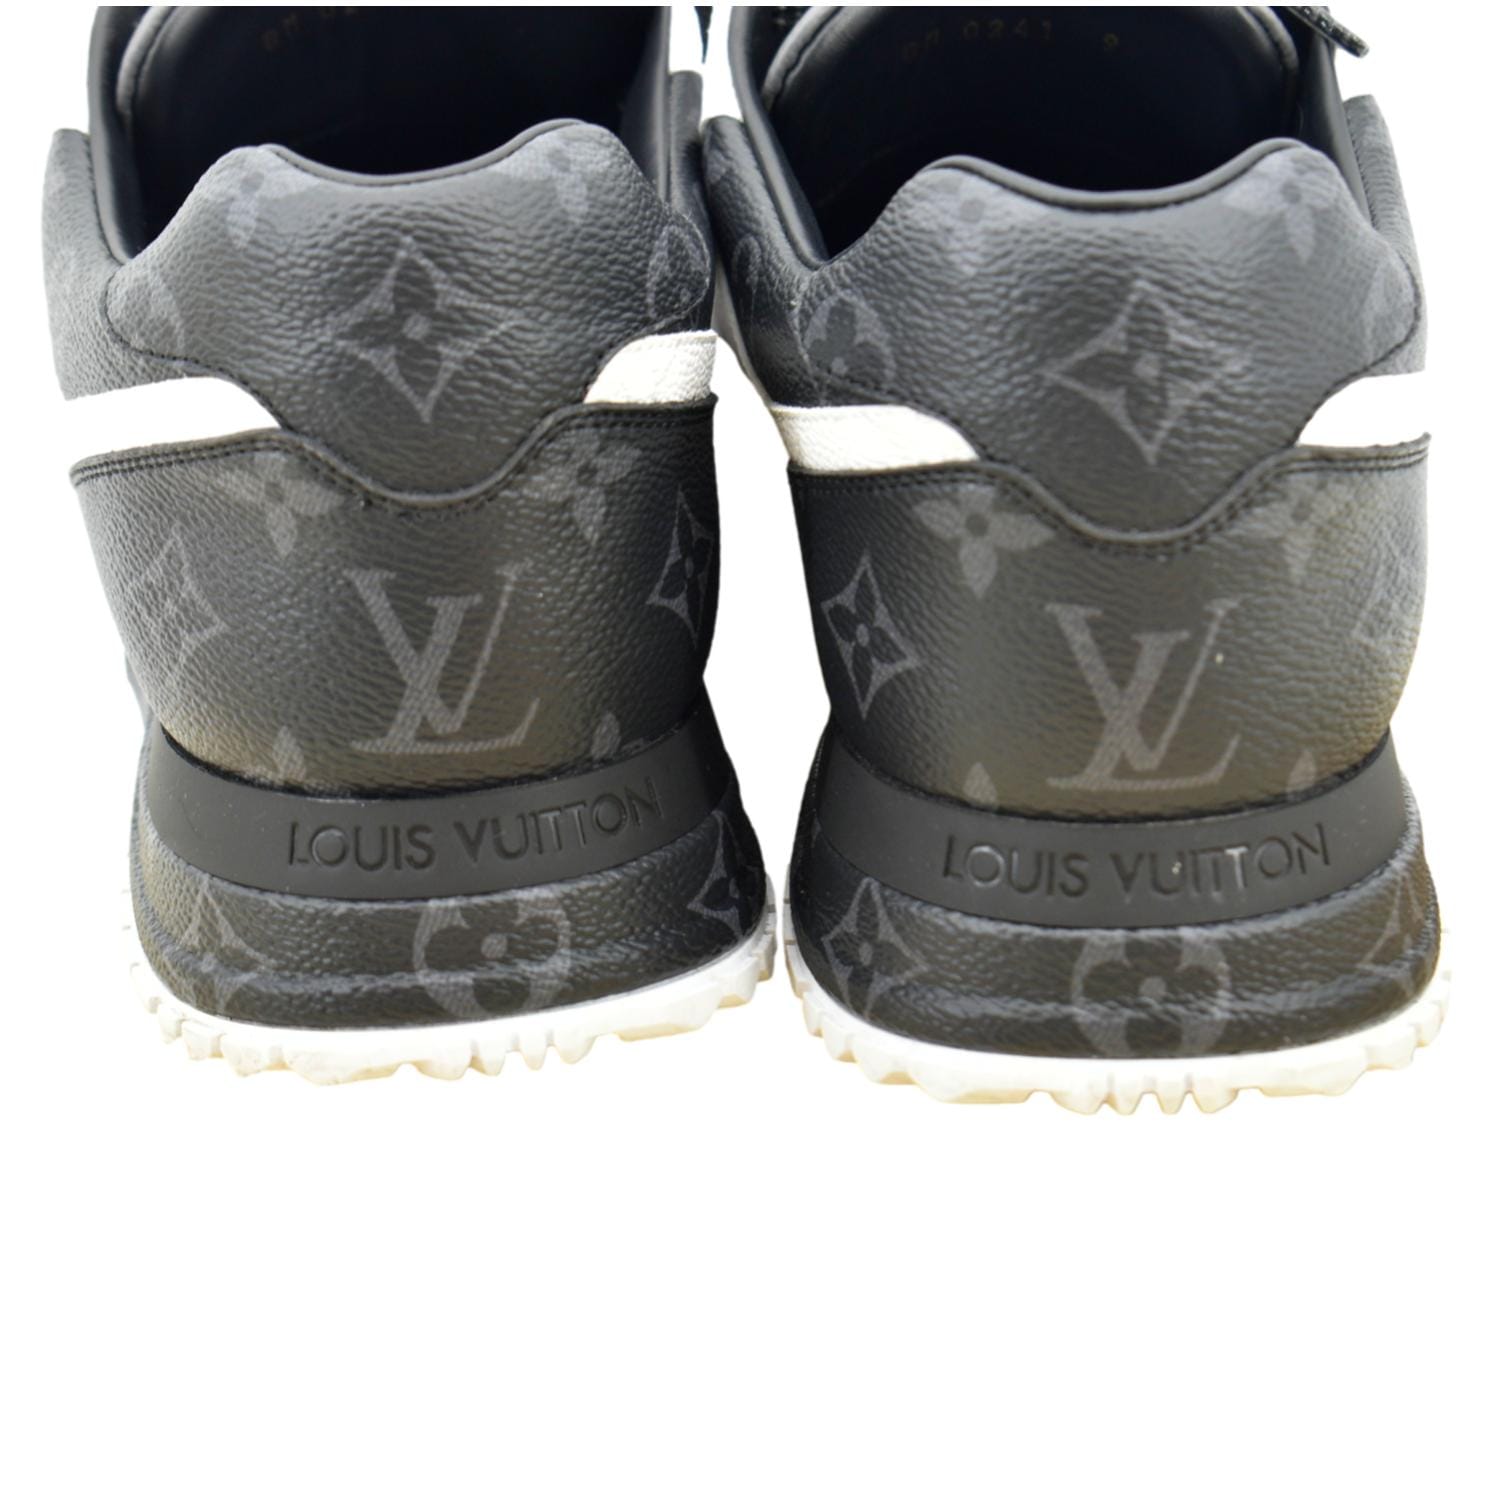 LOUIS VUITTON - Run Away sneaker